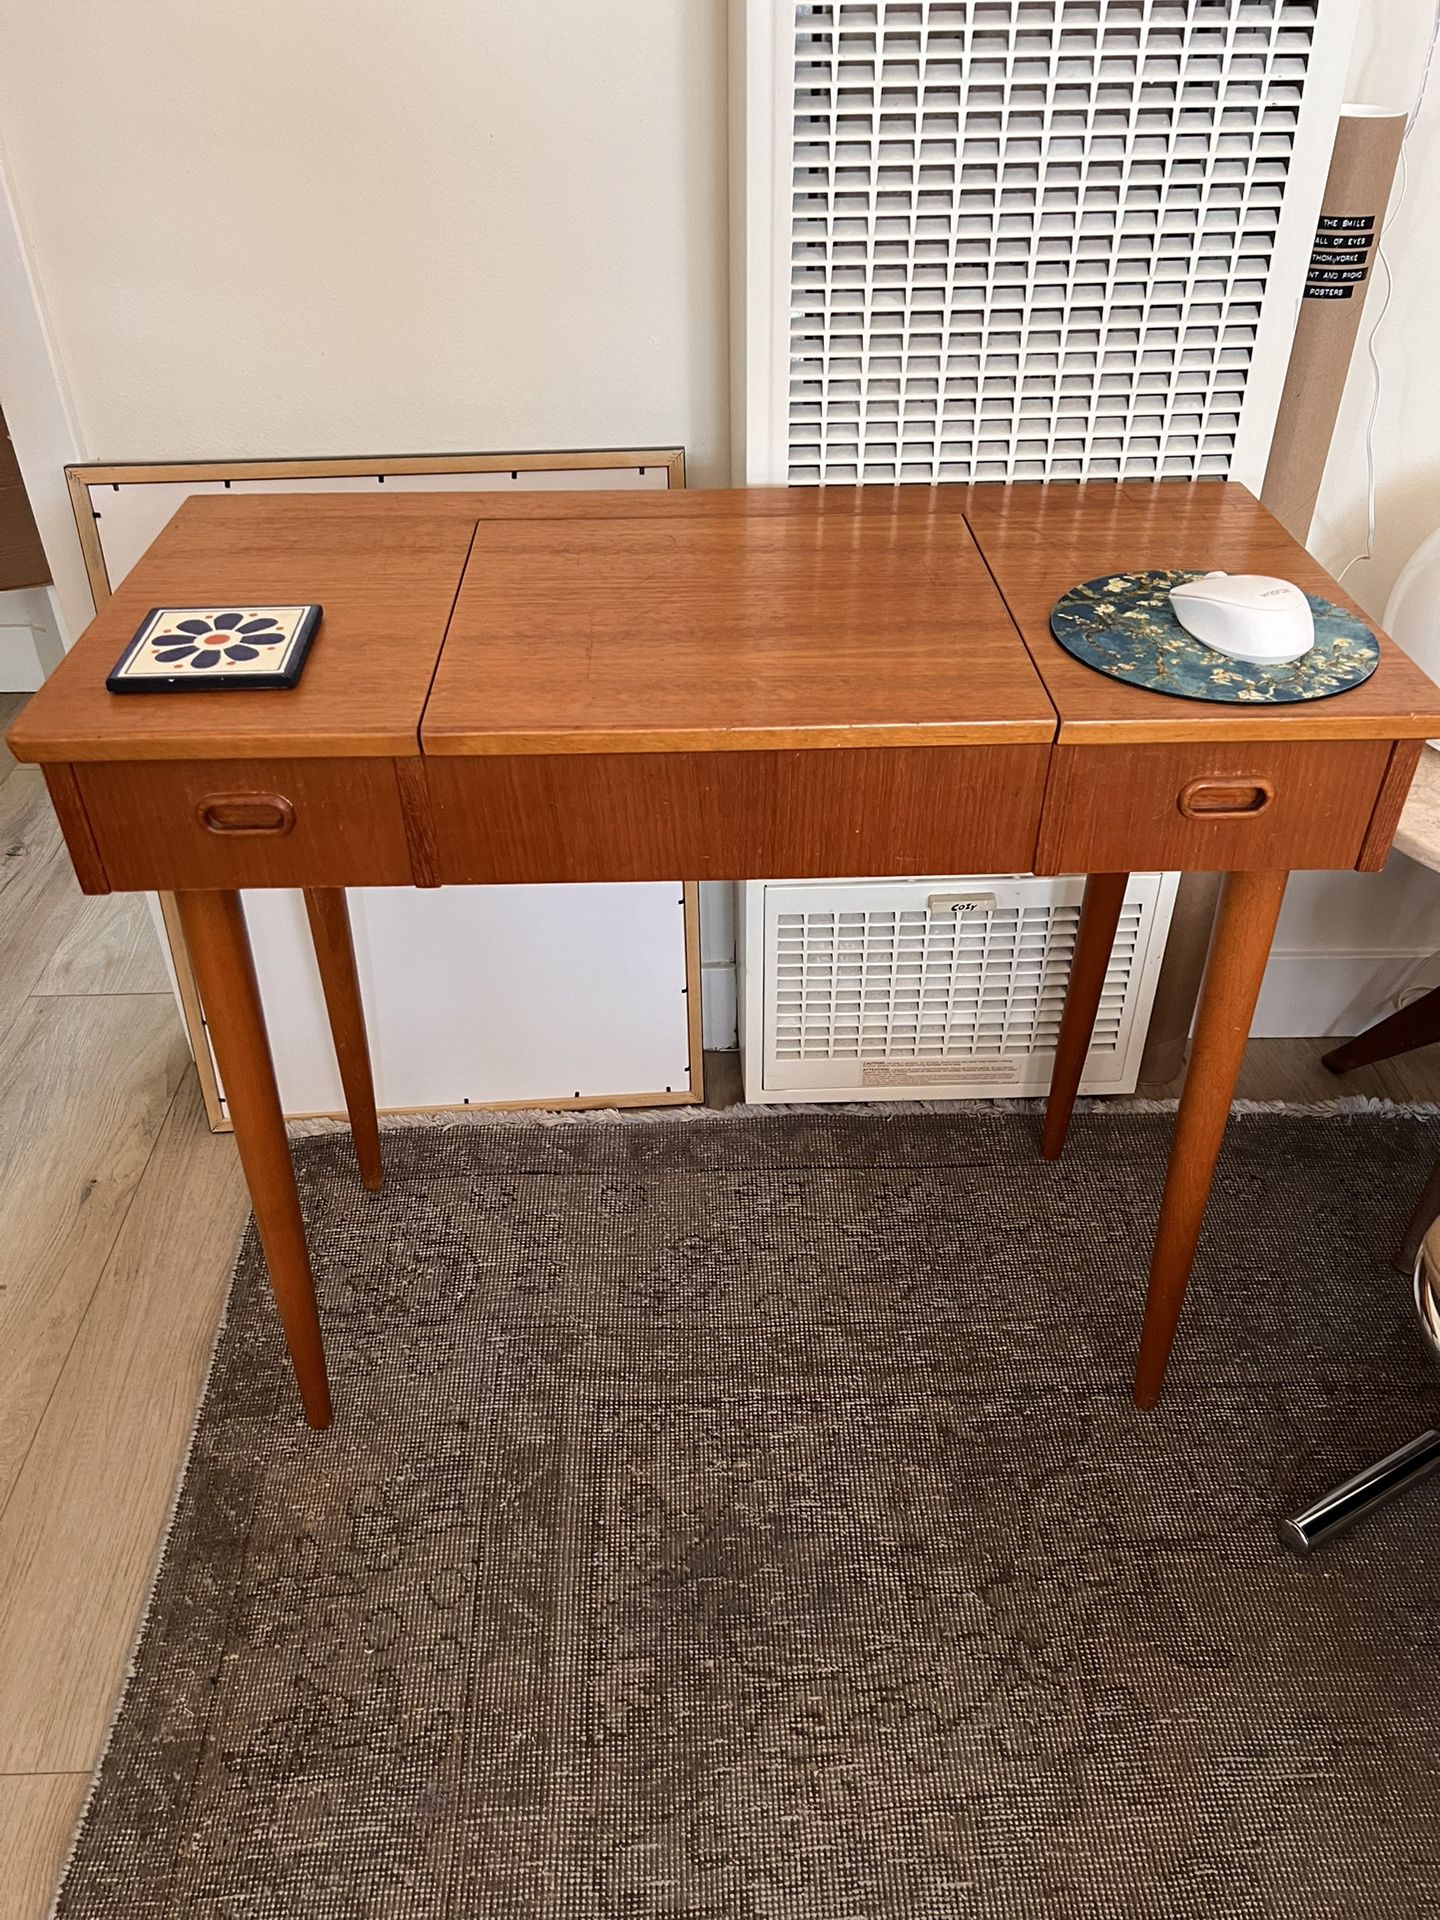 Mid Century Modern Danish Teak Vanity/Desk